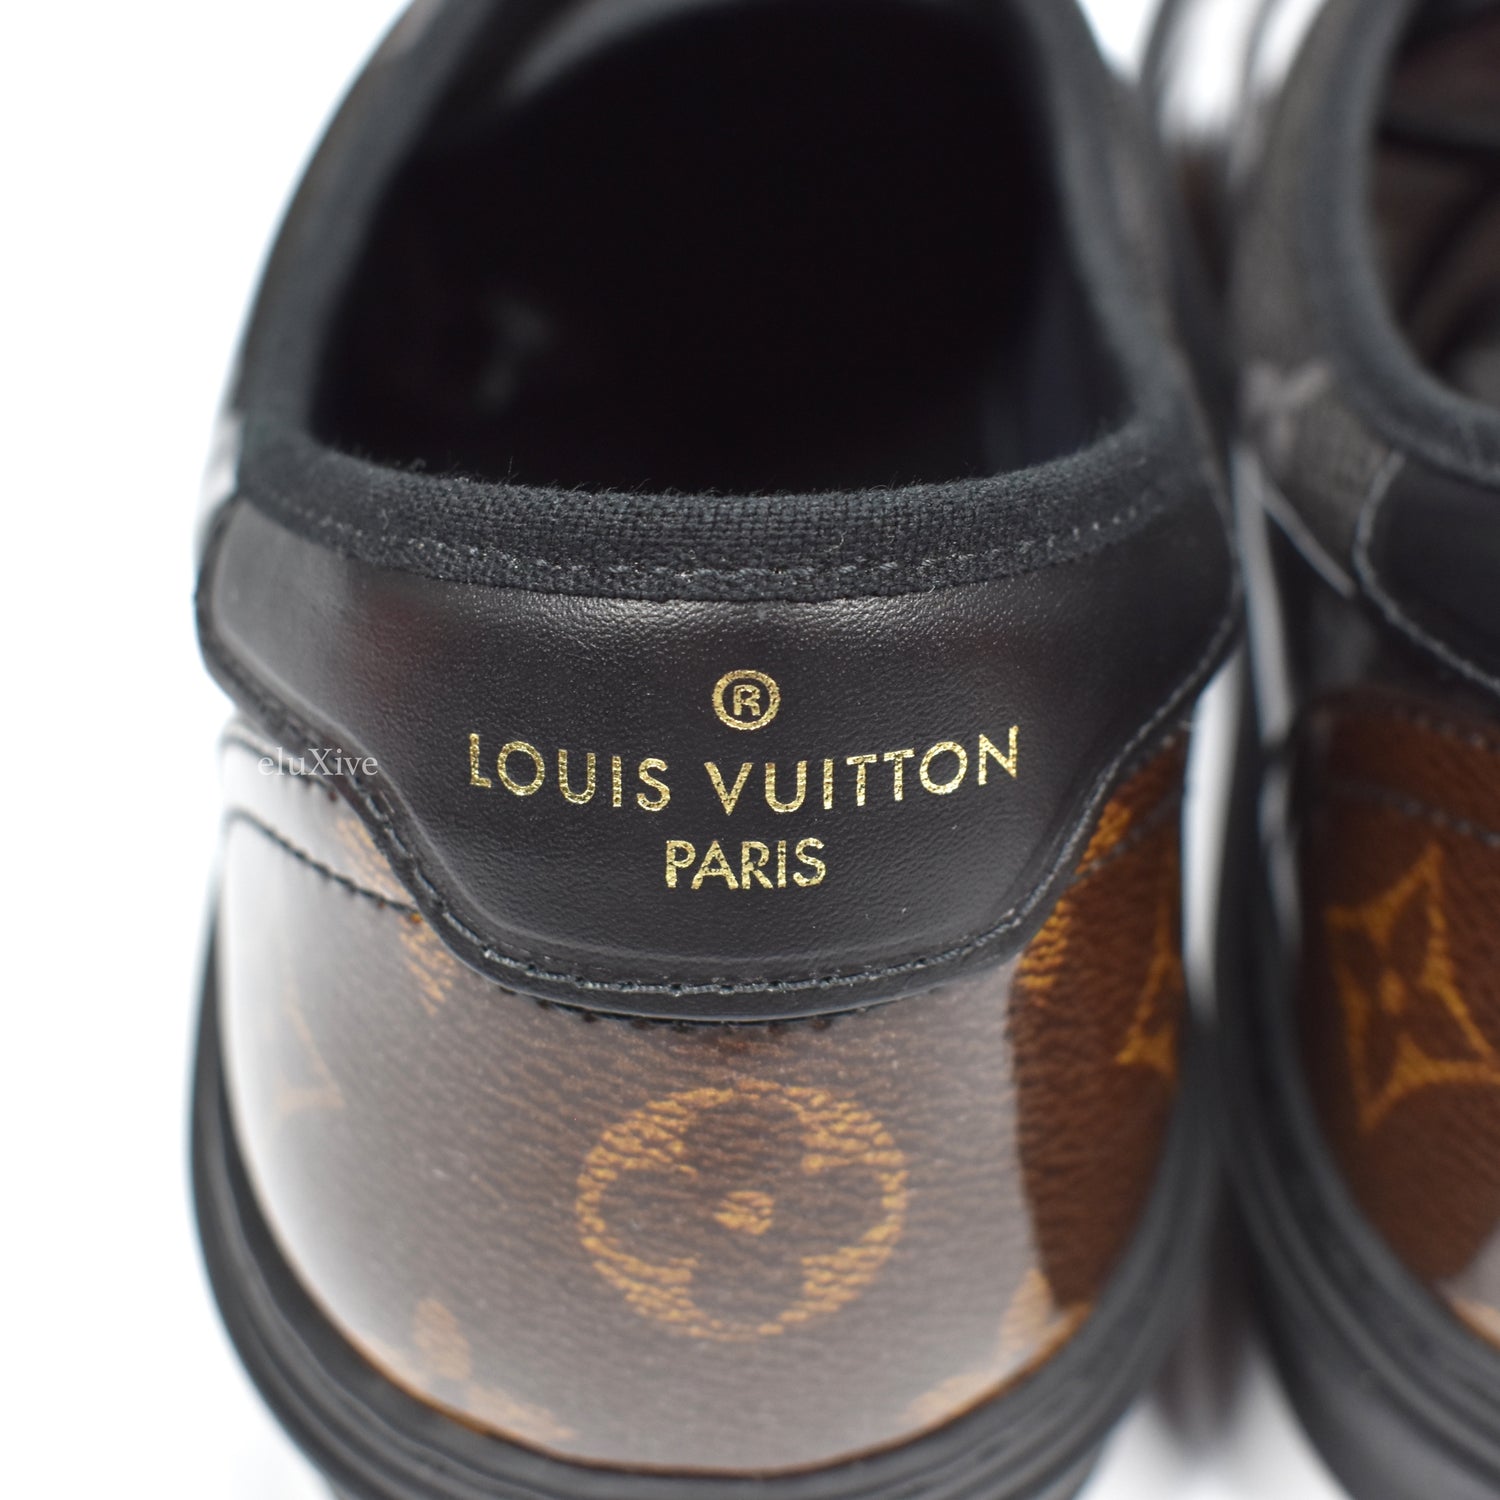 NWT Louis Vuitton Men's Monogram Glaze Logo Trocadero